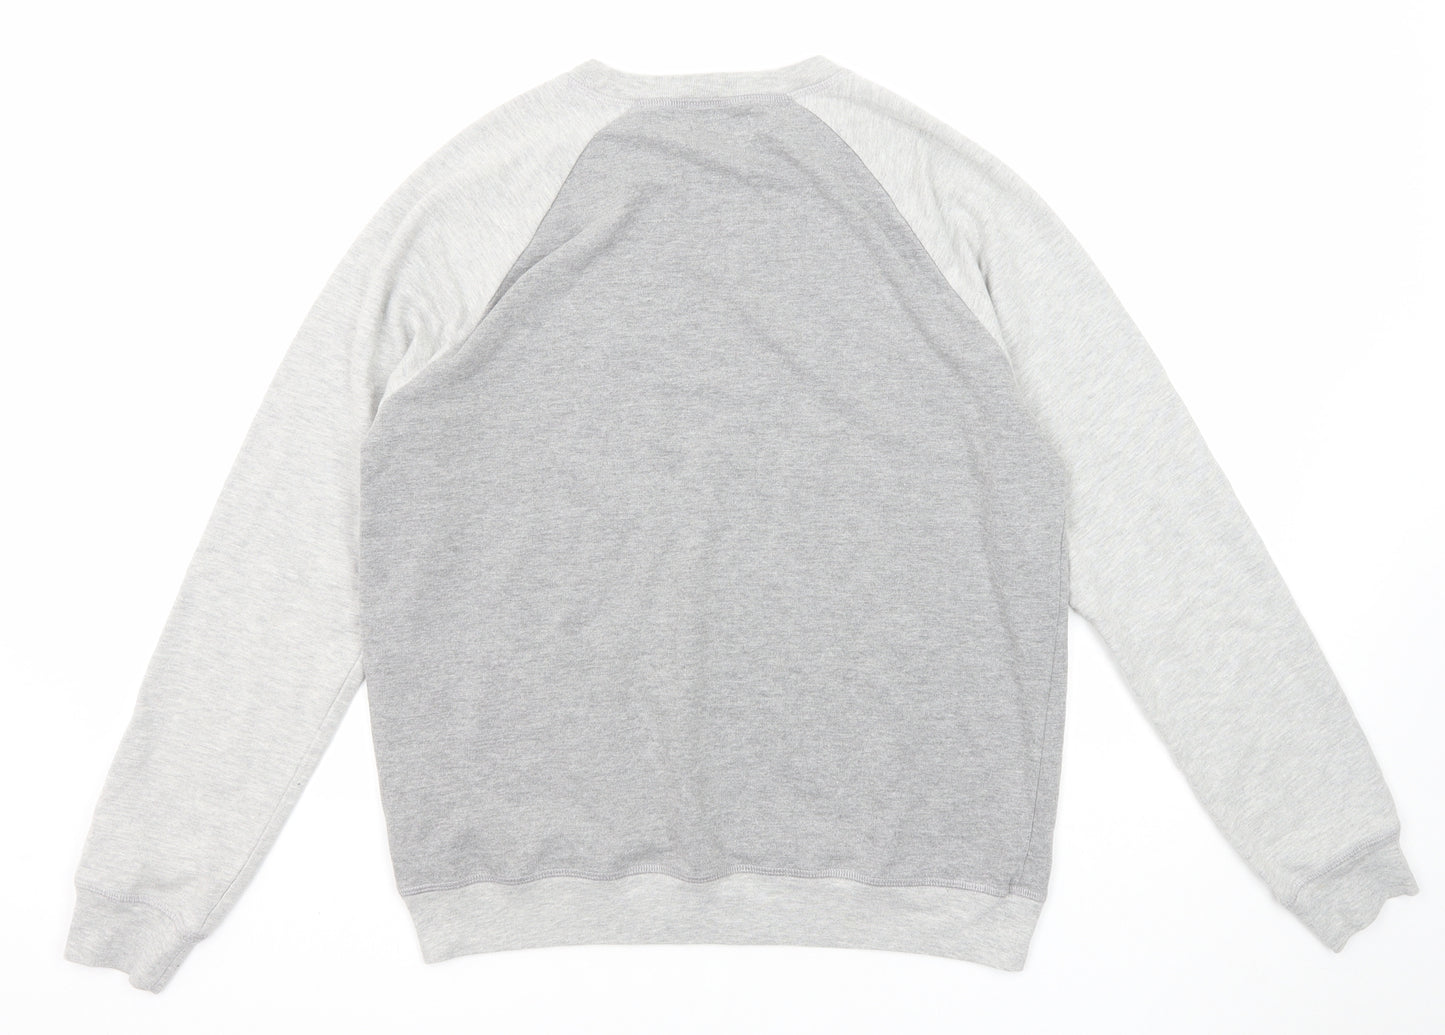 Topman Mens Grey Cotton Pullover Sweatshirt Size L